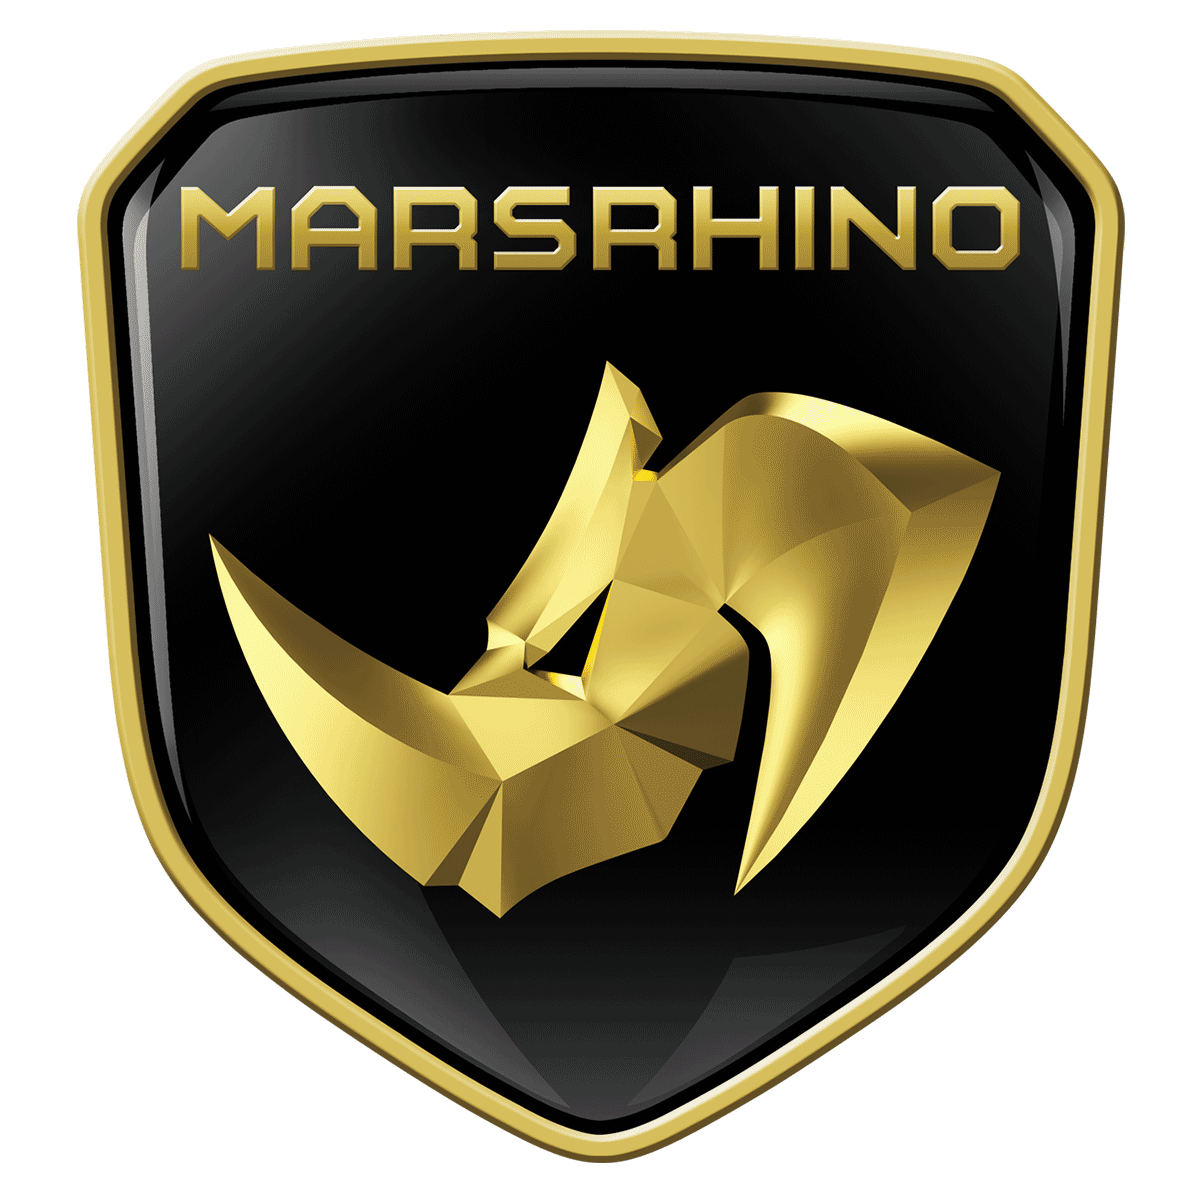 MarsRhino